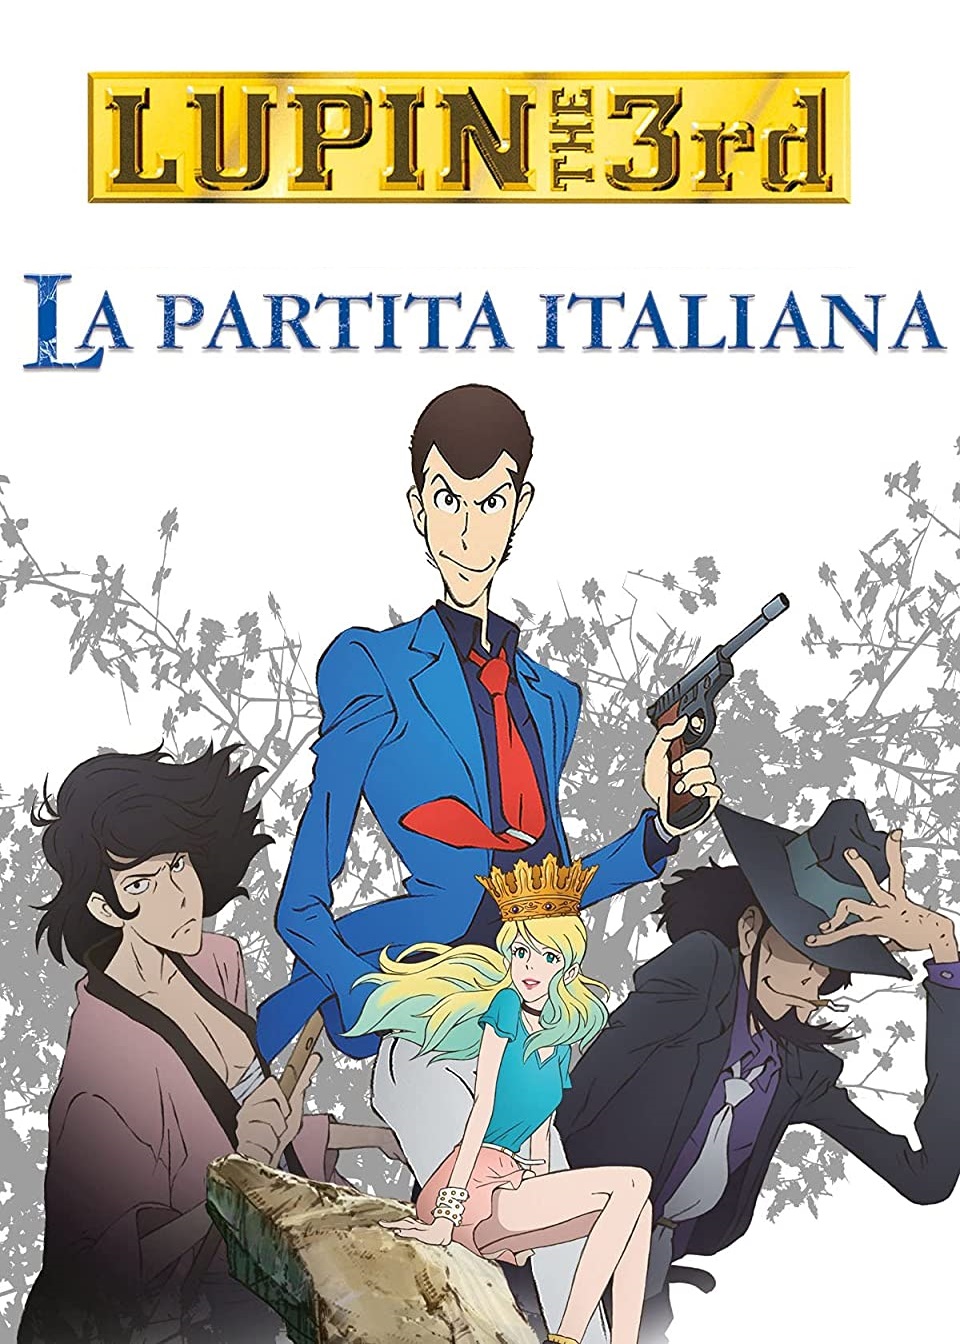 Lupin III – La partita italiana [HD] (2016)